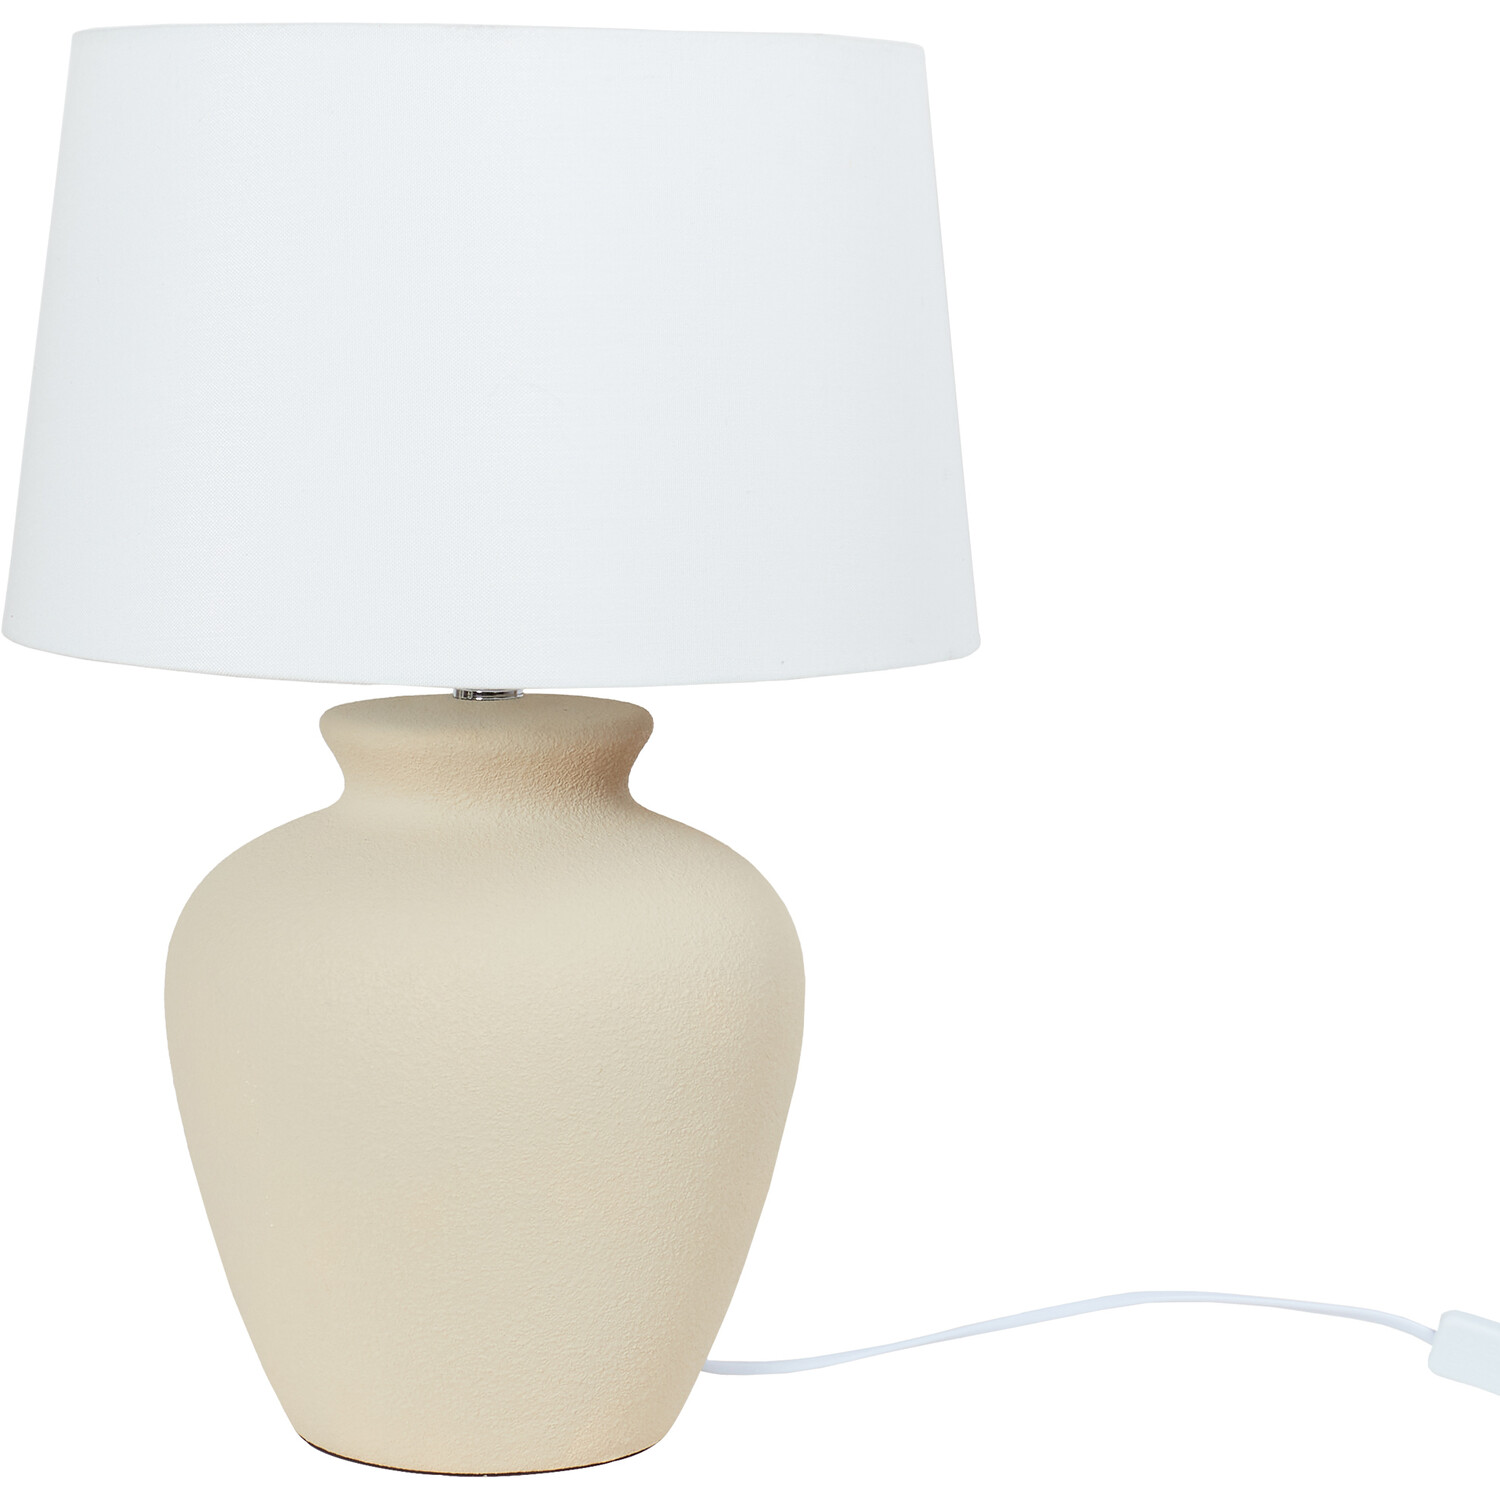 Rocco Table Lamp - Cream Image 1